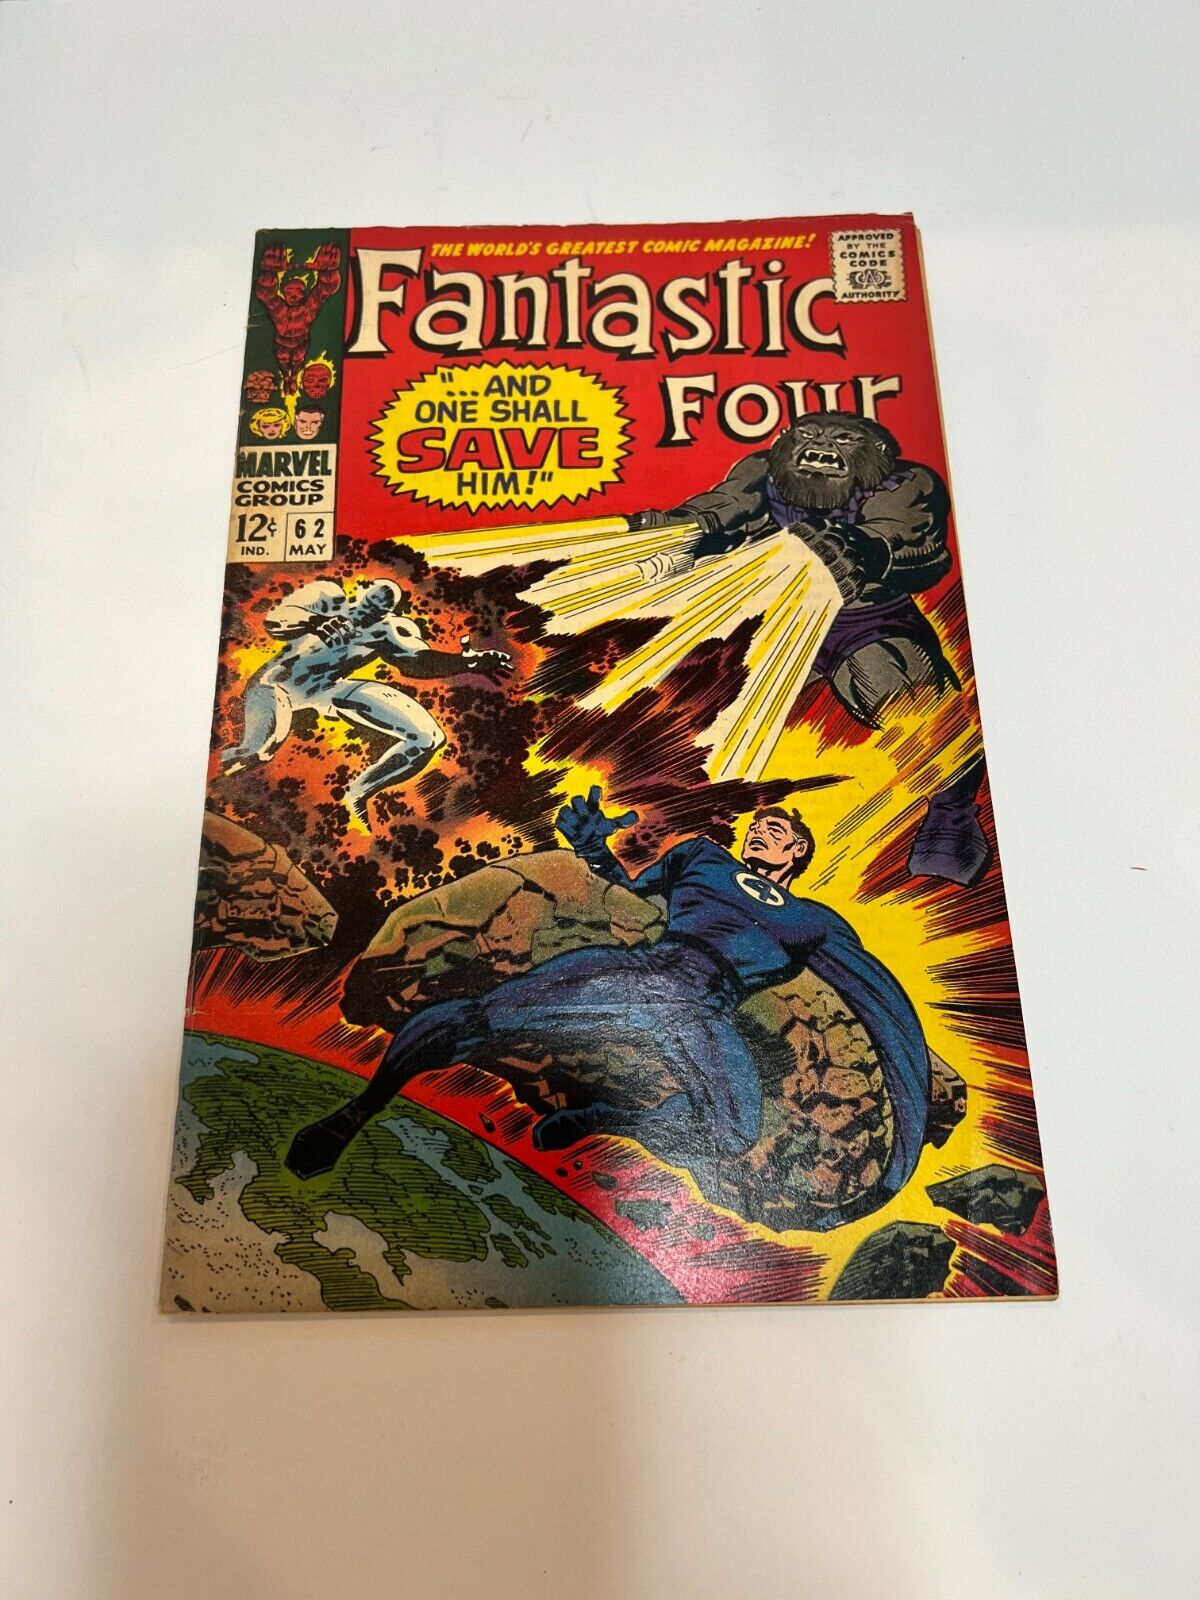 Fantastic Four #62 1st app Blastaar Inhumans Negative Zone Lee/Kirby 1967